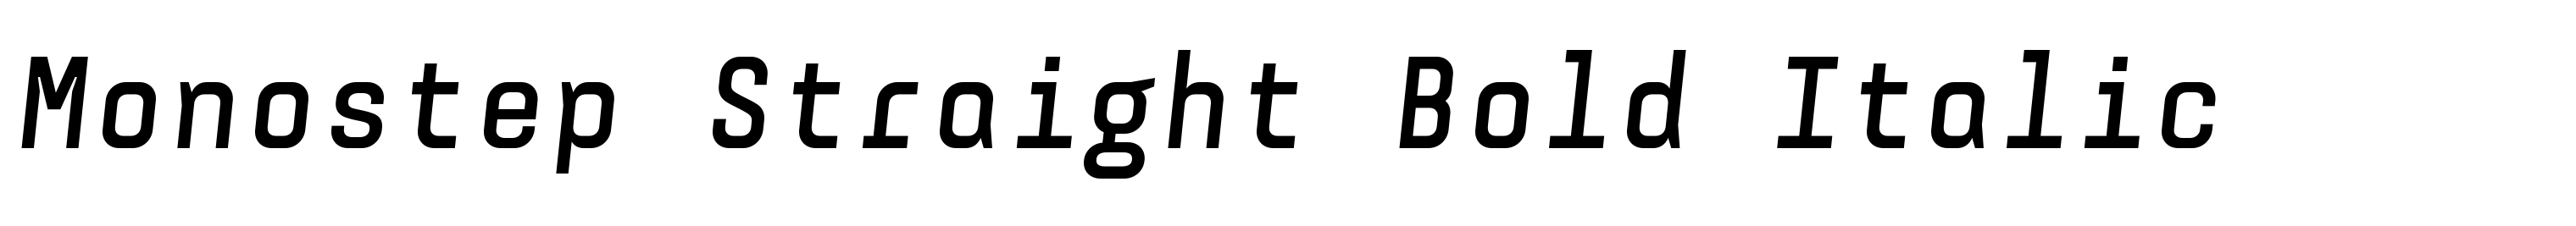 Monostep Straight Bold Italic